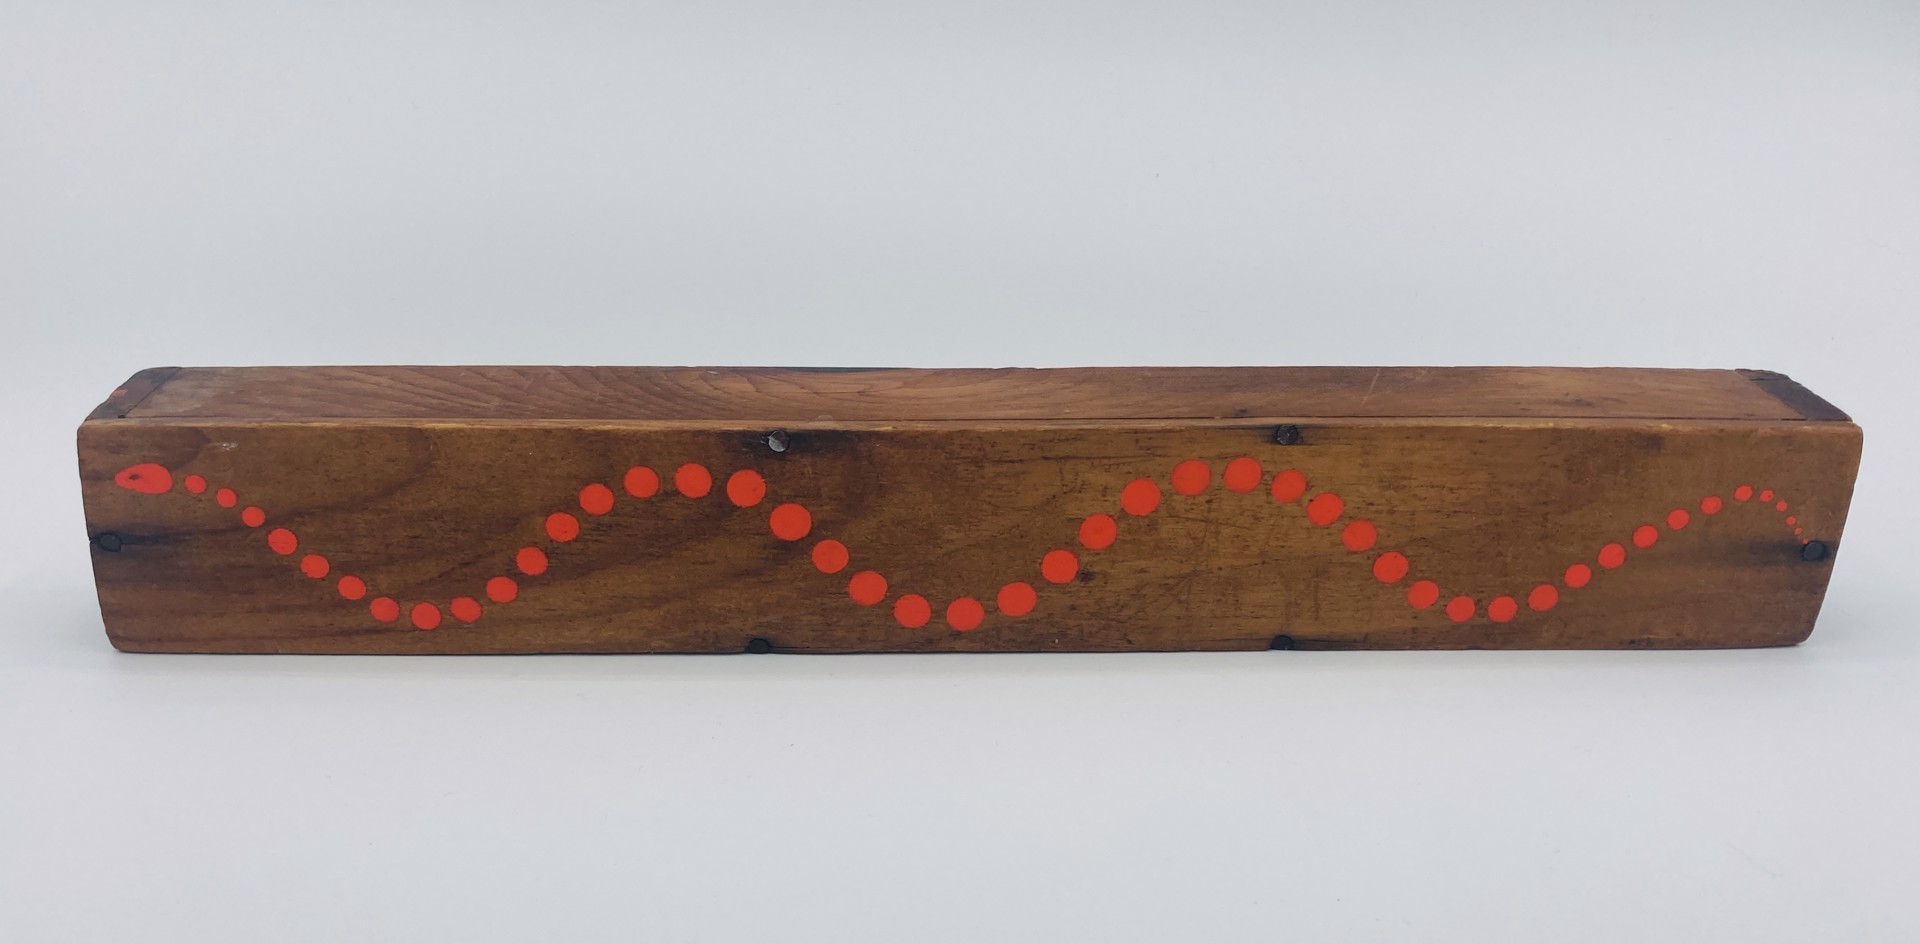 Red Serpent on found wooden box by Matt Messinger